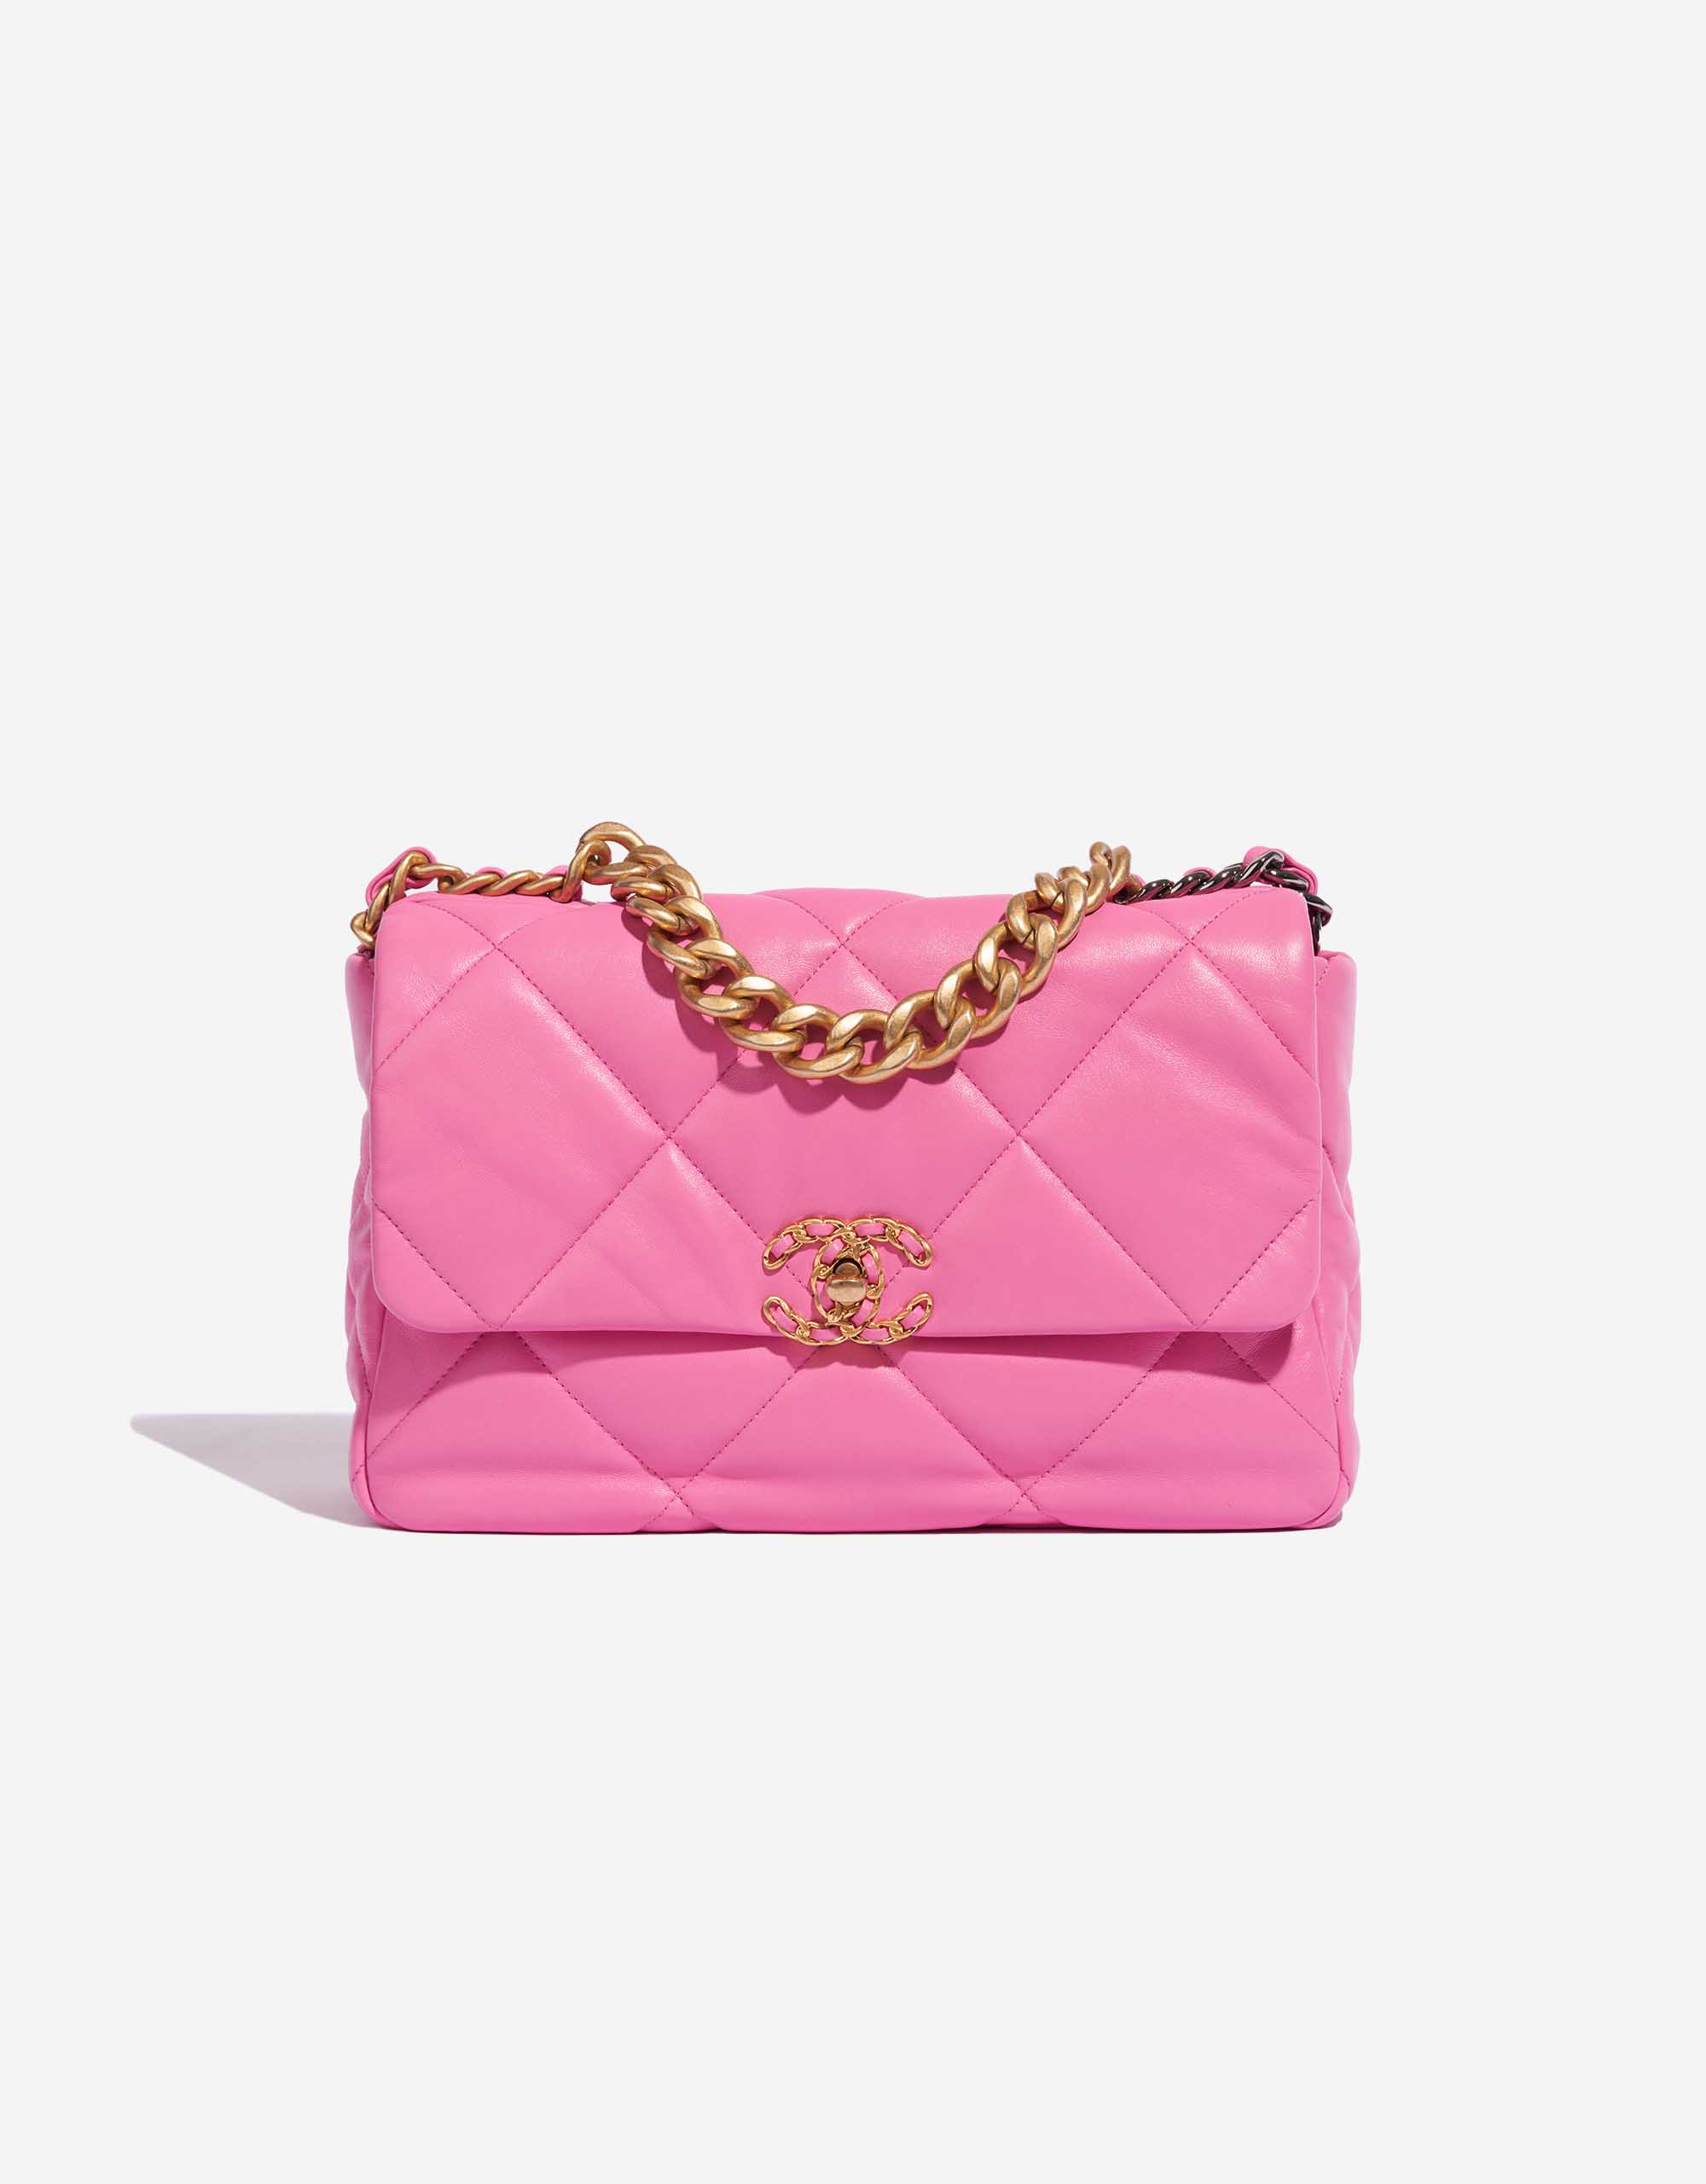 Chanel 19 Large Flap Bag Lamb Rose | SACLÀB